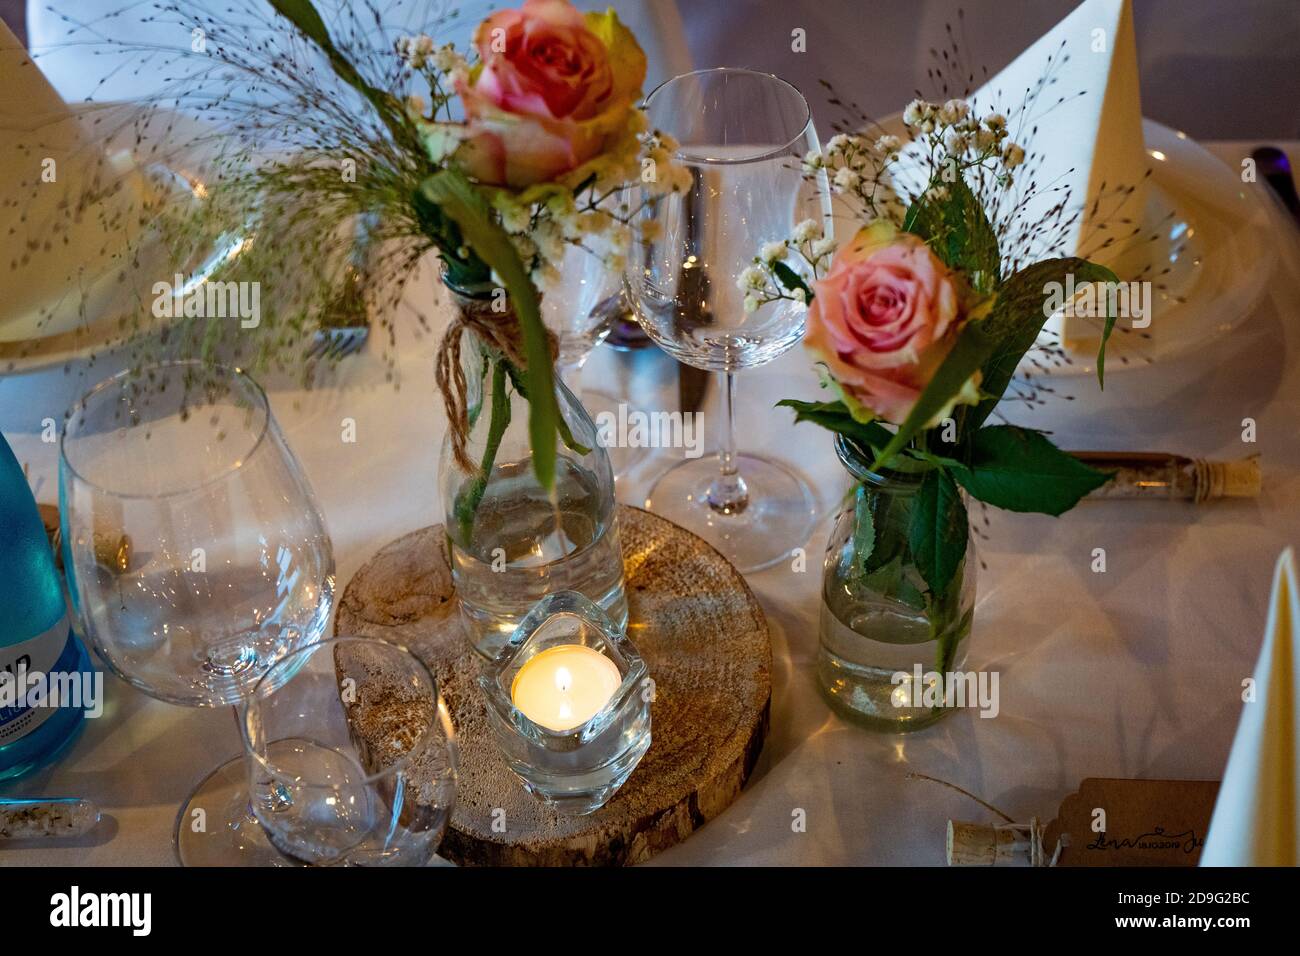 wedding table decoration Stock Photo